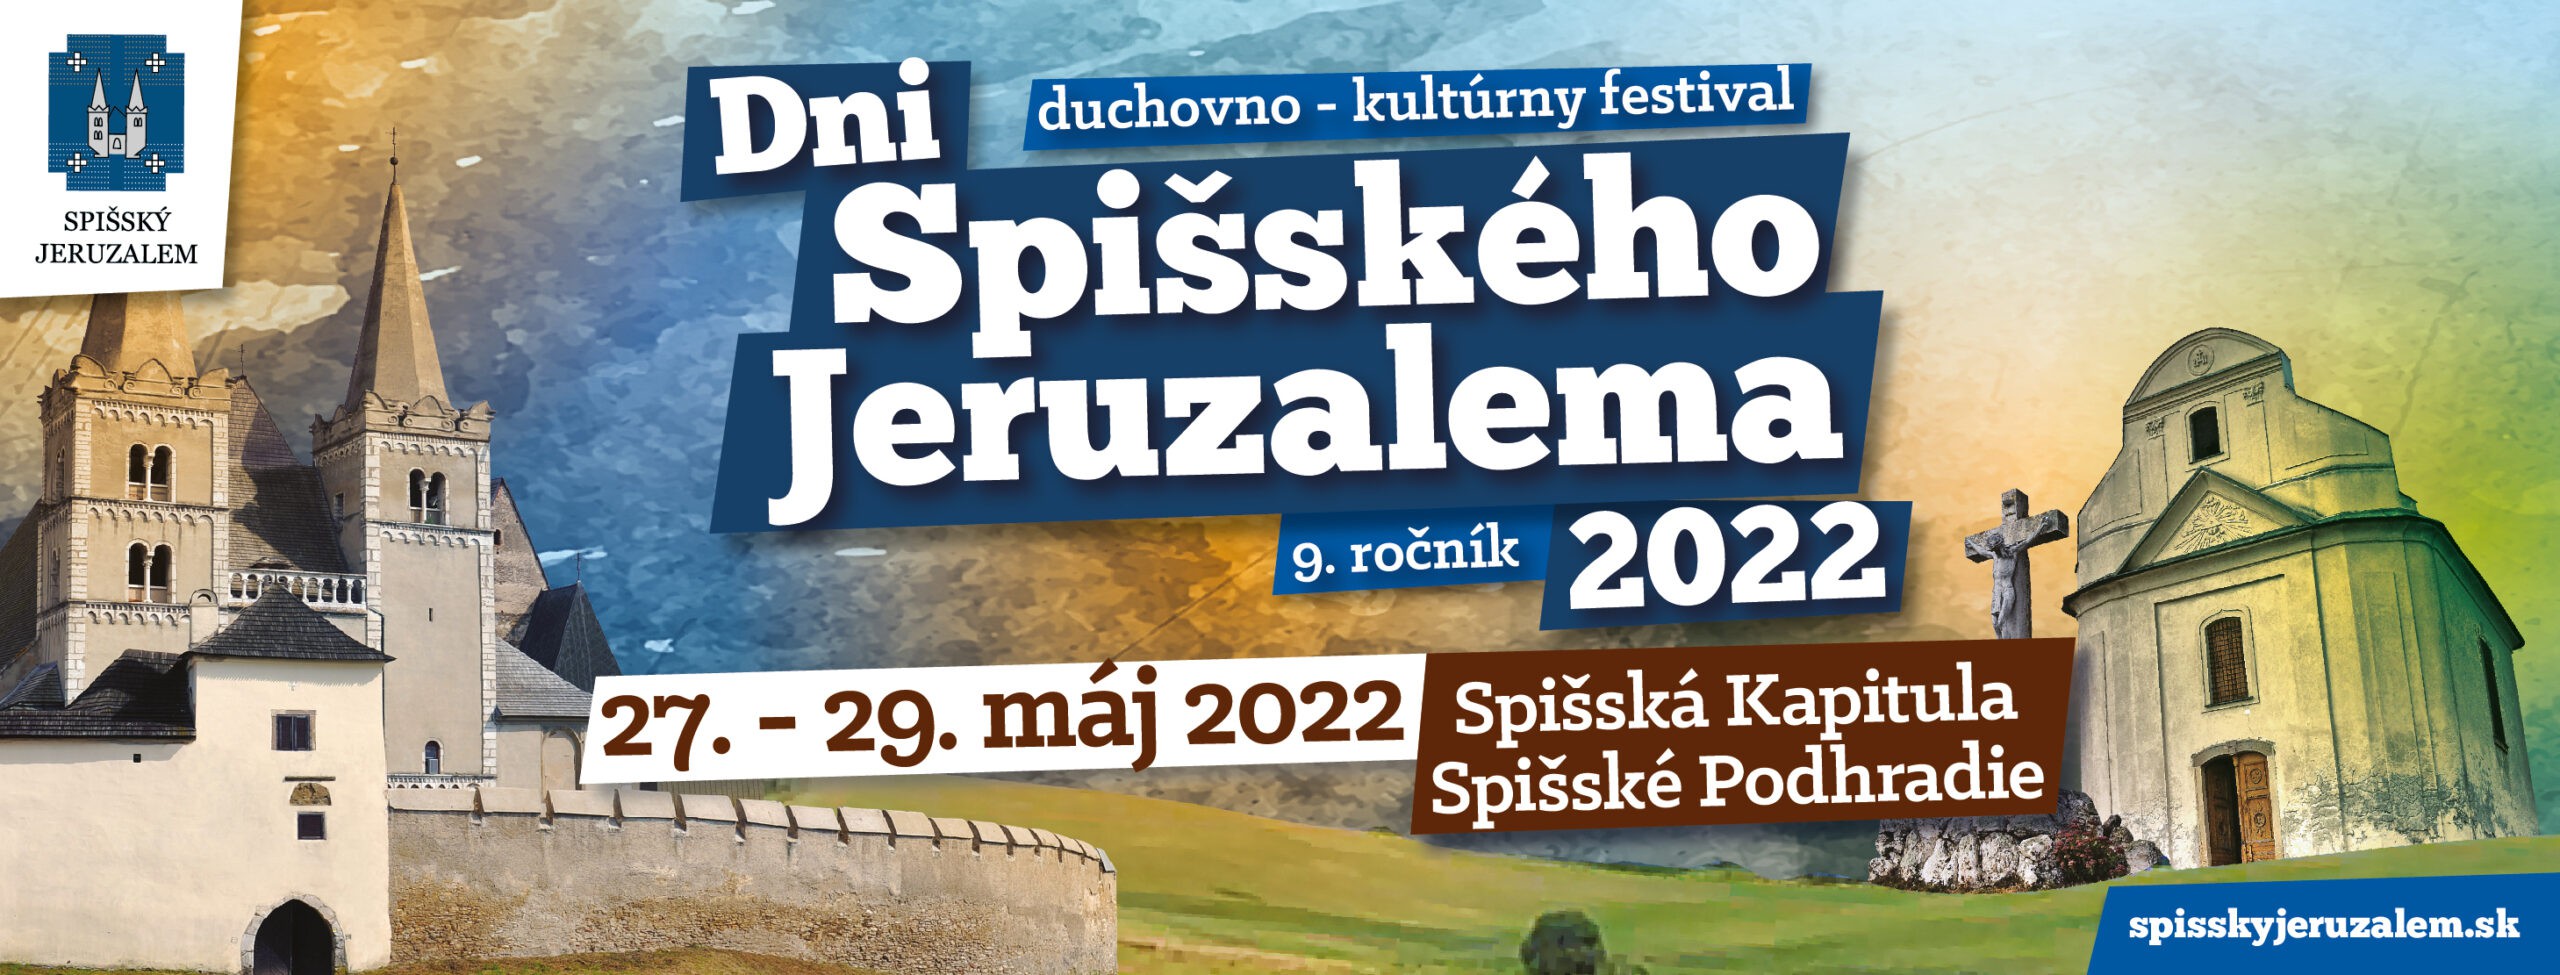 spissky-jeruzalem-2022-banner-1-scaled.jpg